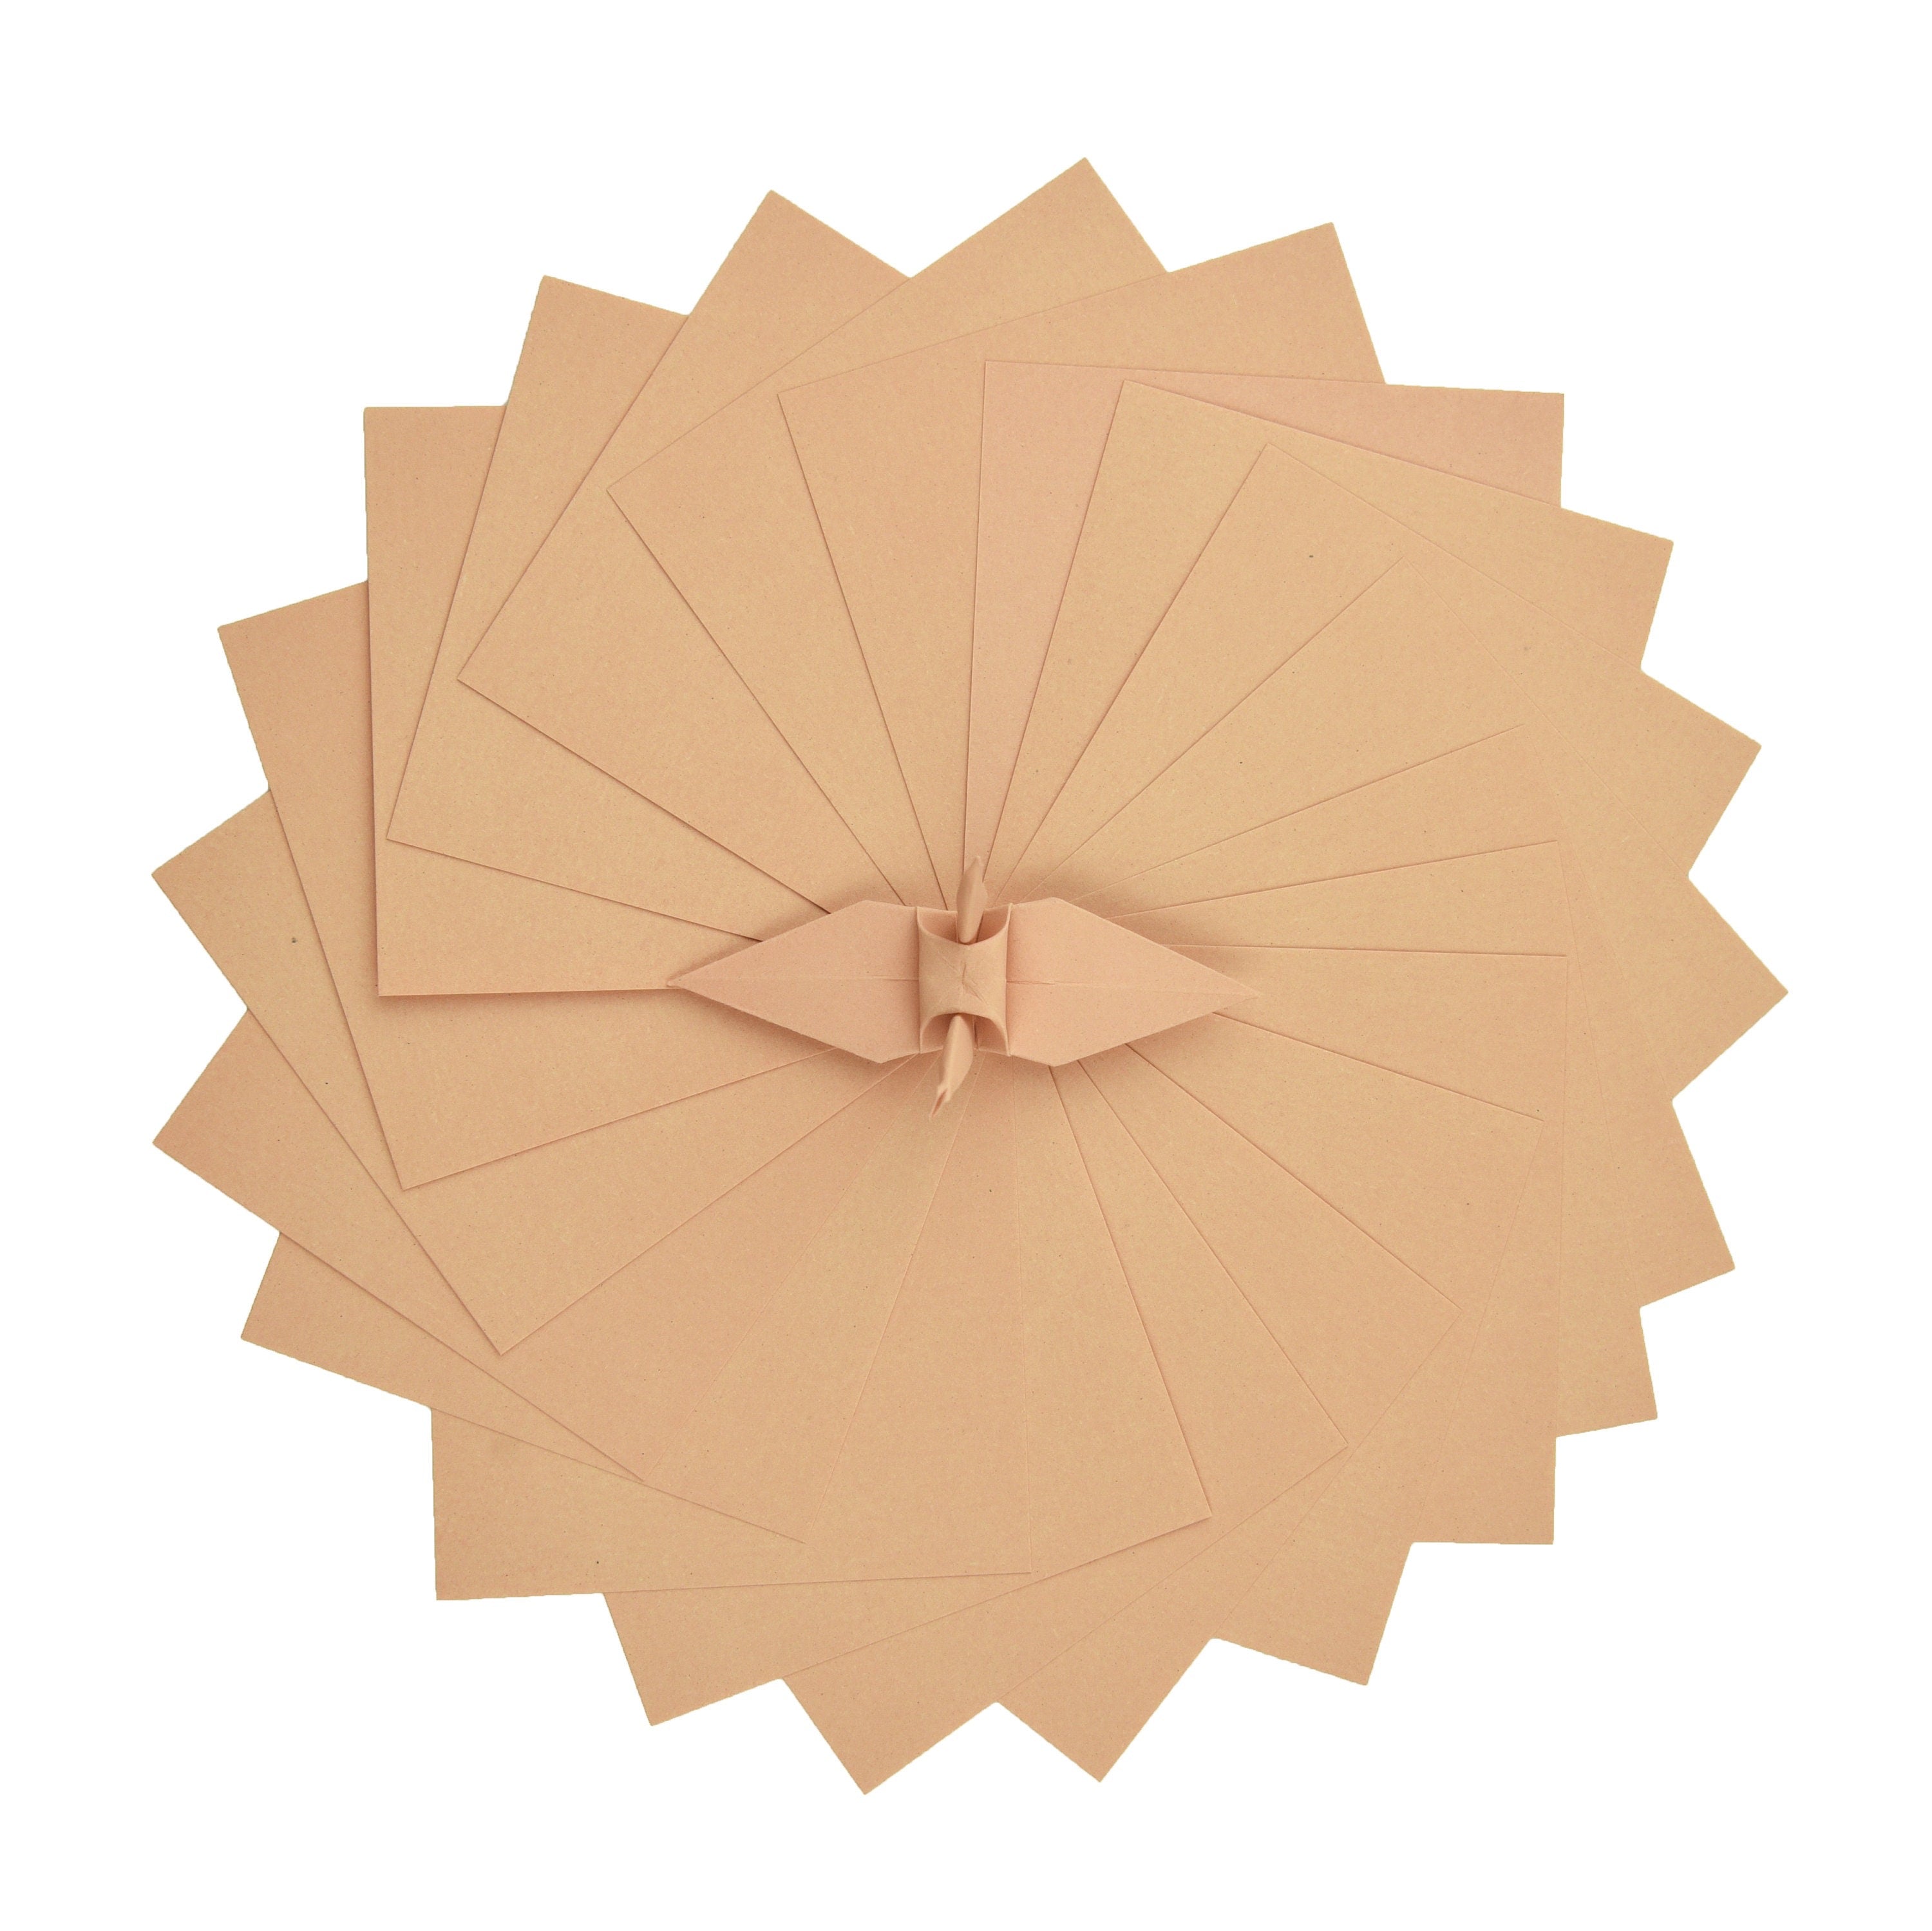 100 fogli di carta origami base - 6x6 pollici - Confezione di carta quadrata per piegatura, gru origami e decorazioni - S02